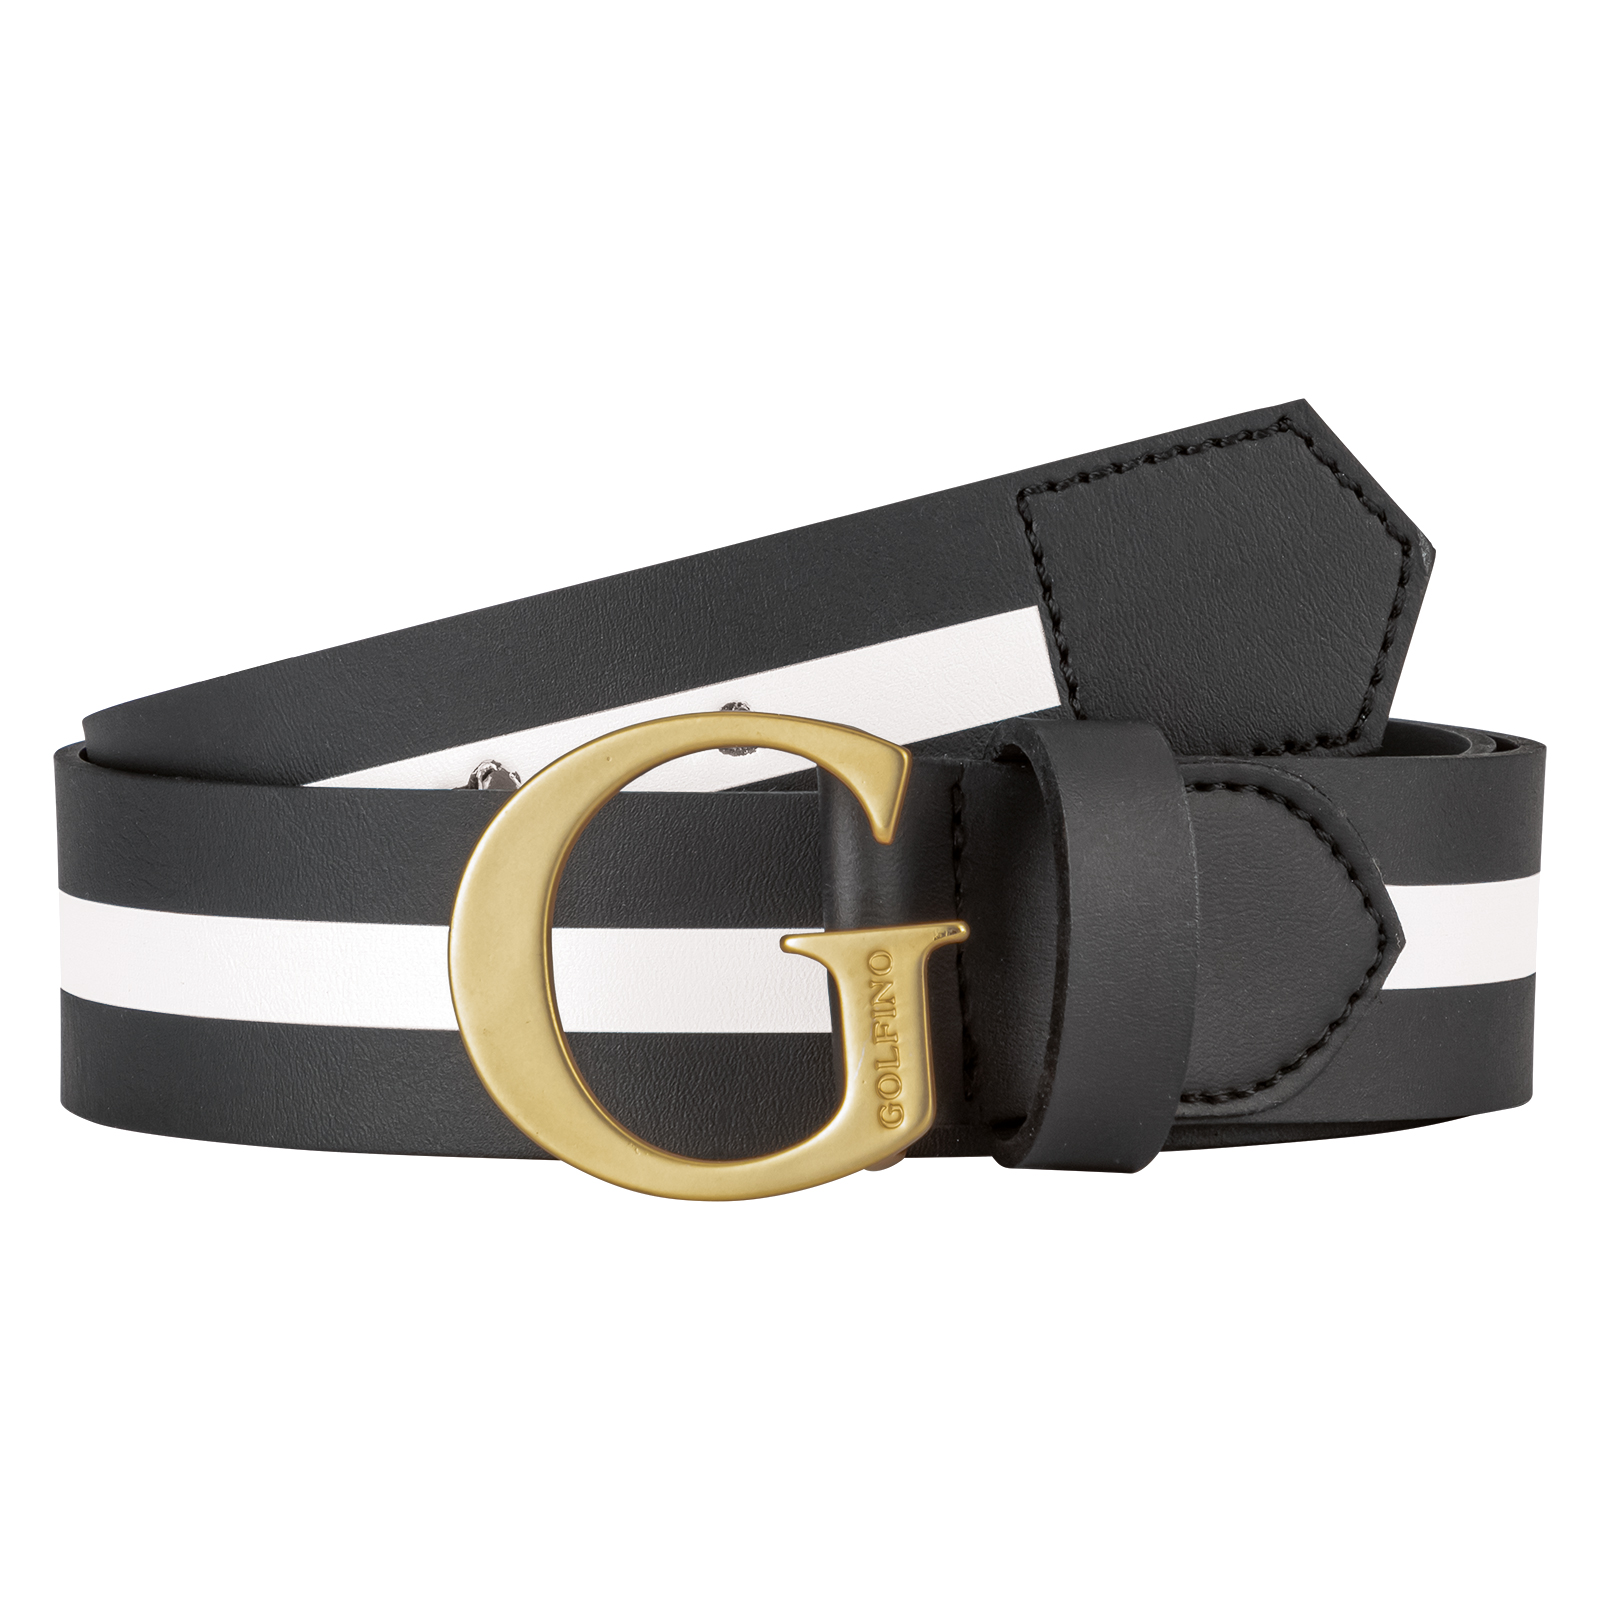 Ladies' exclusive belt with gold metal G buckle